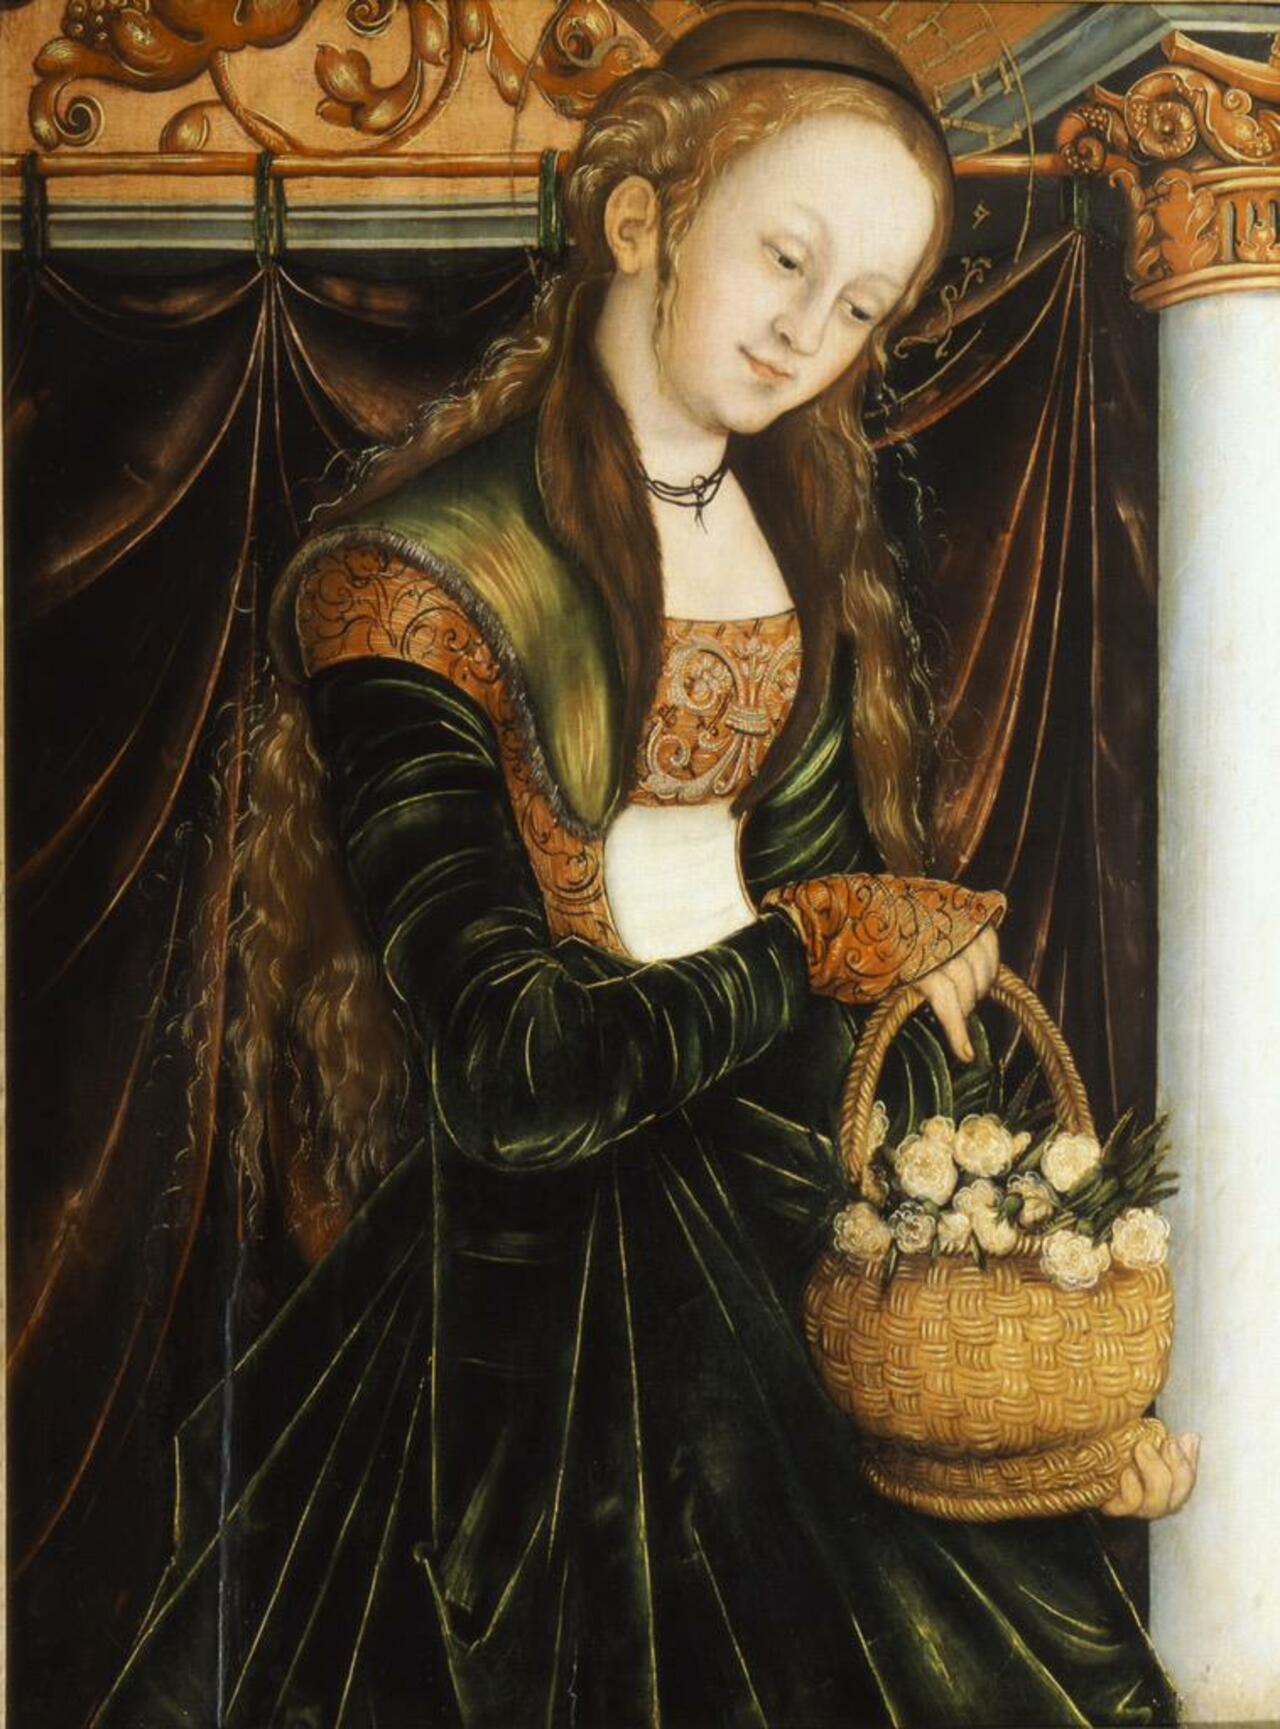 “@geminicat7: 'St. Dorothea'
Lucas Cranach the Elder, c.1530 #art http://t.co/XvMQgAZ4kU”